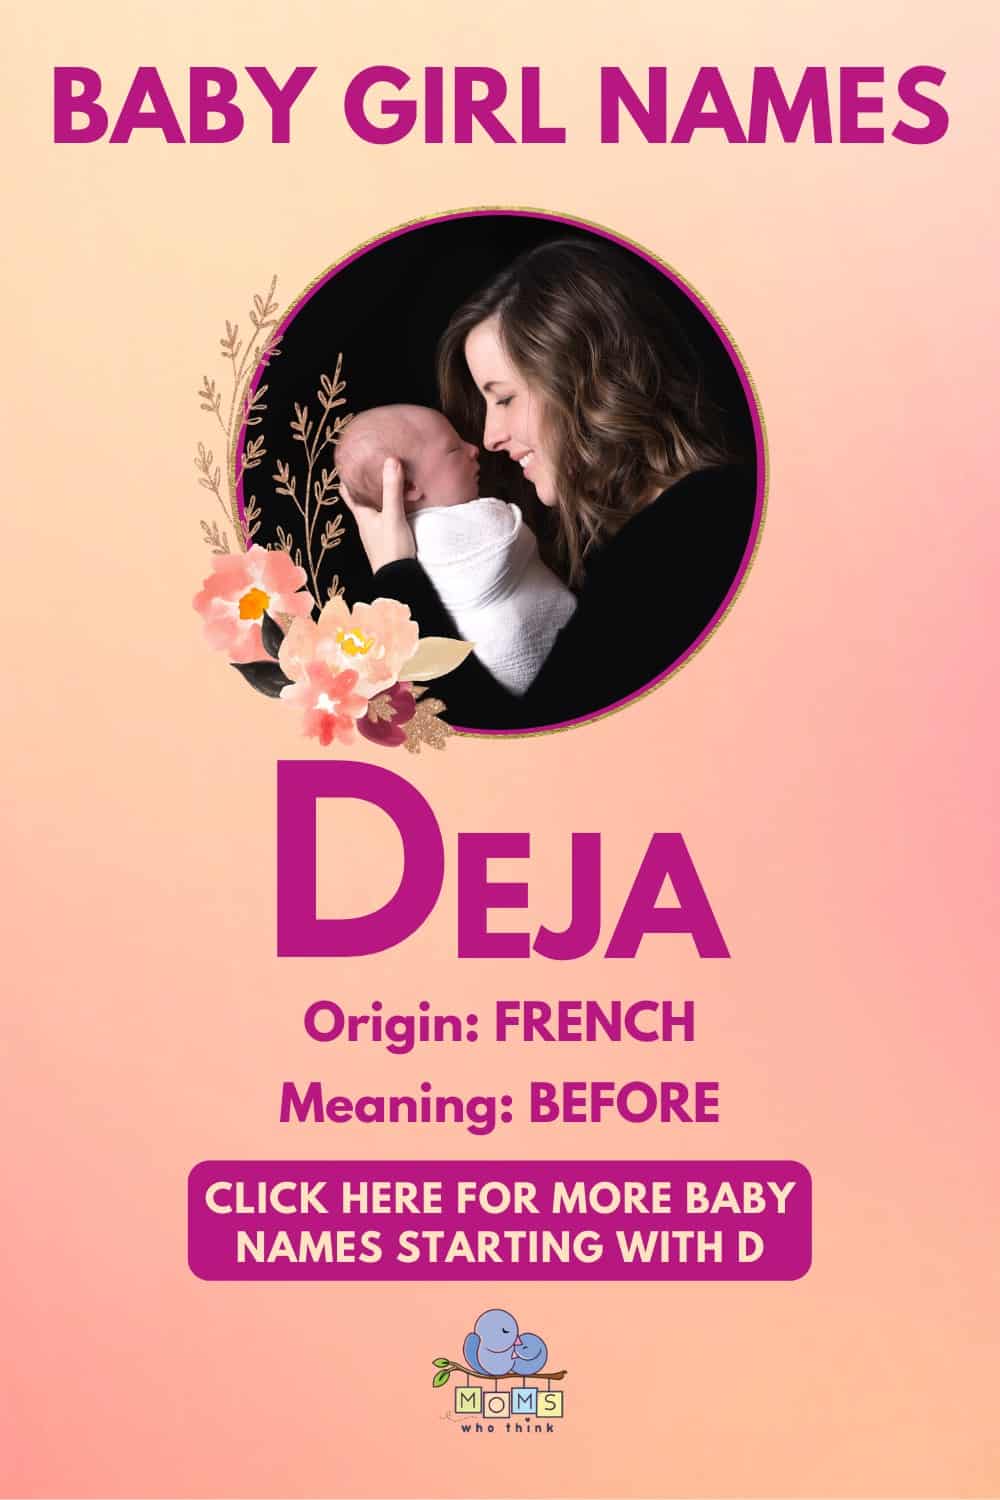 Baby girl name meanings - Deja